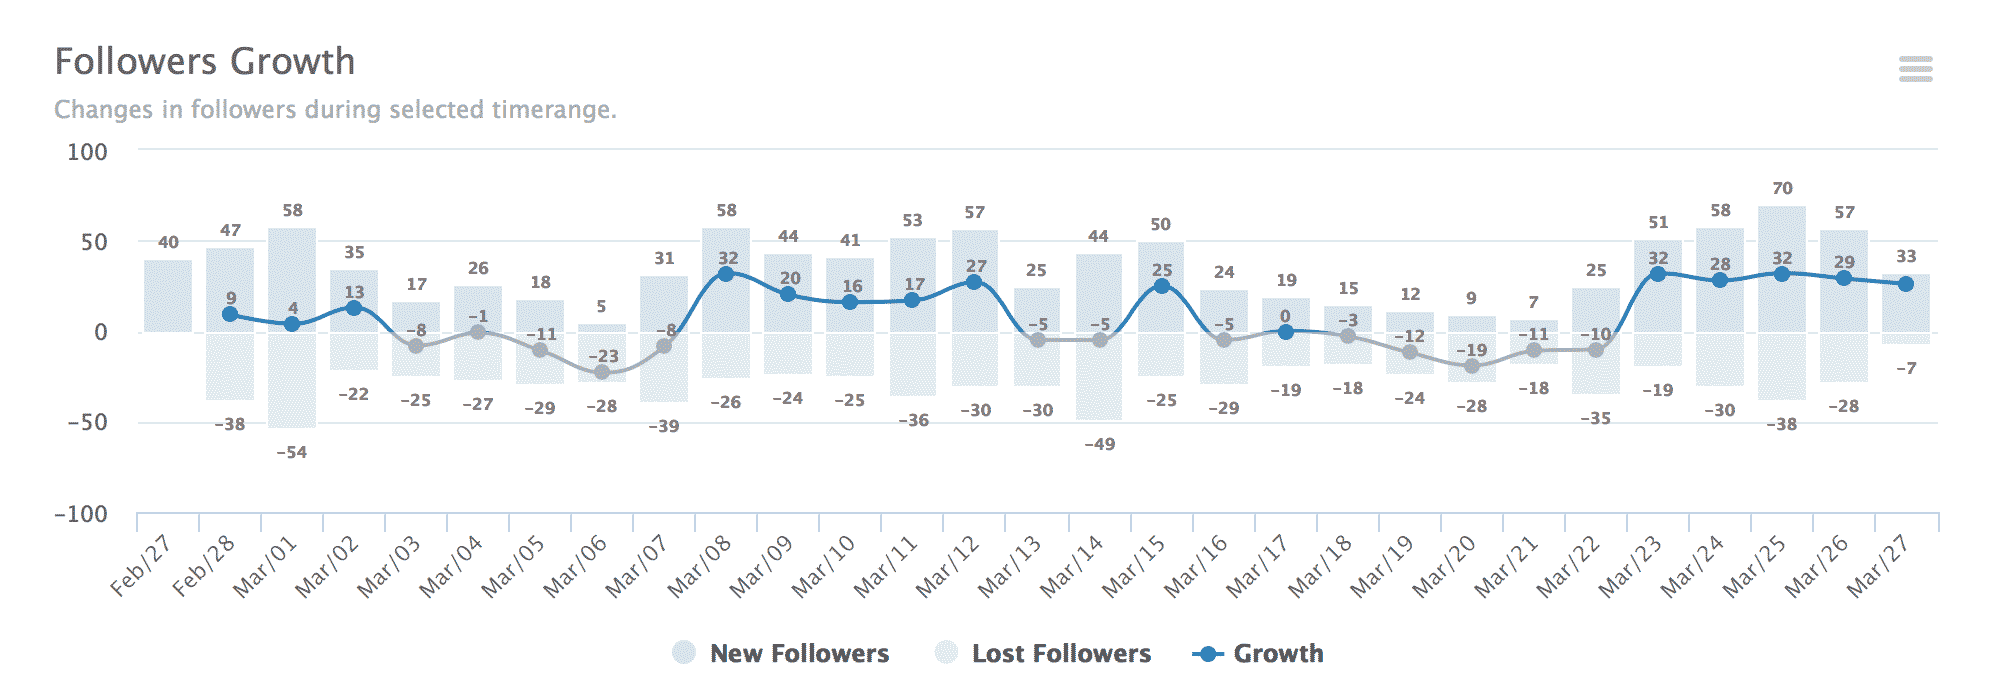 Followers Growth